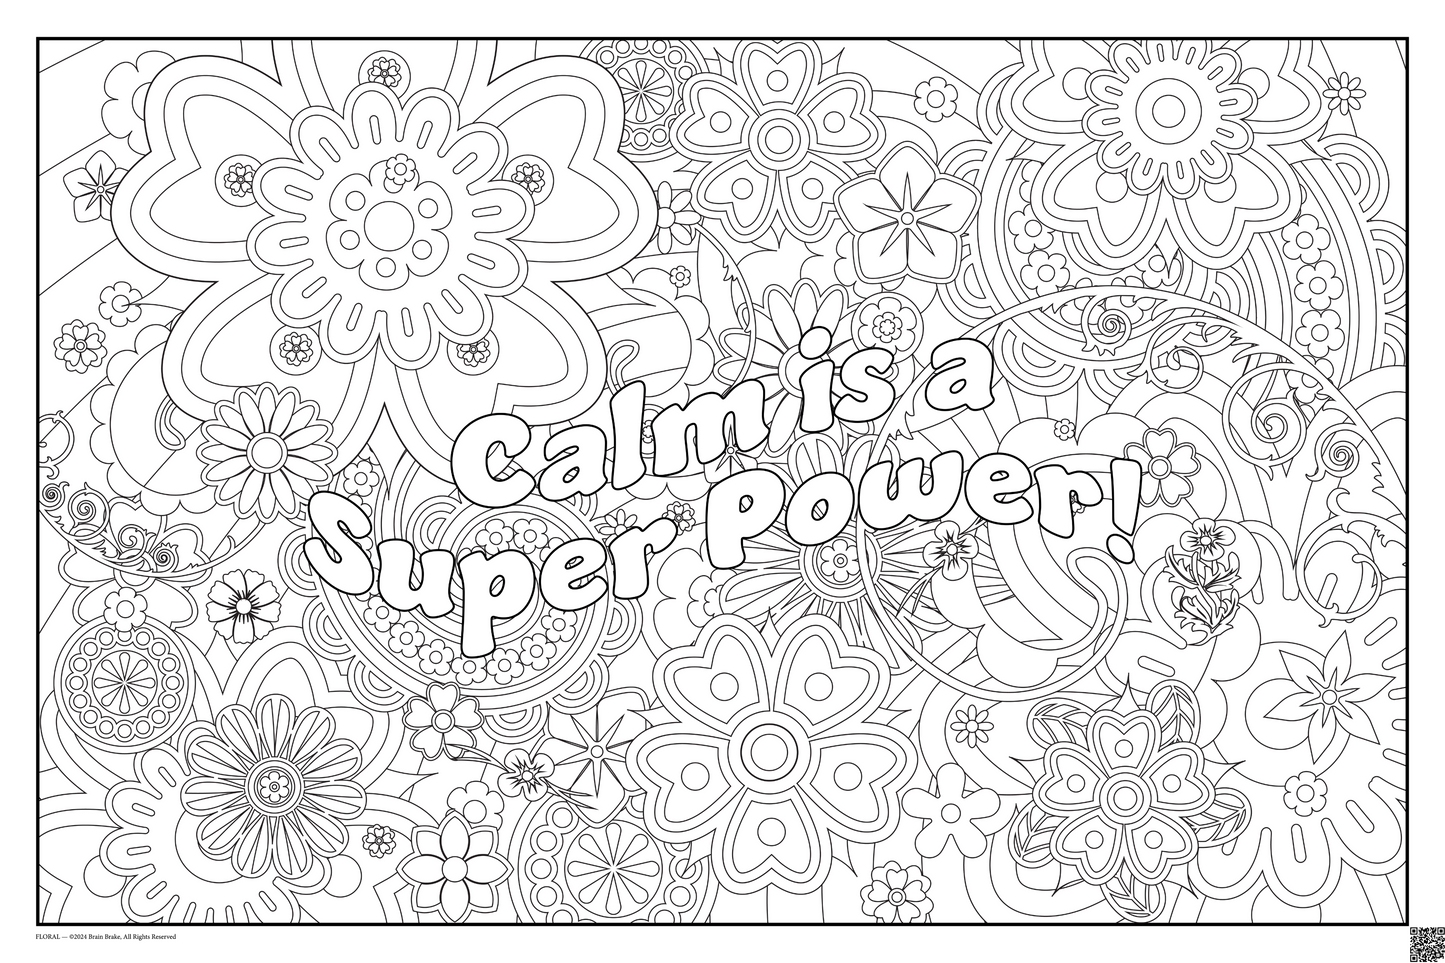 Calming Corner: Calm is a Super Power